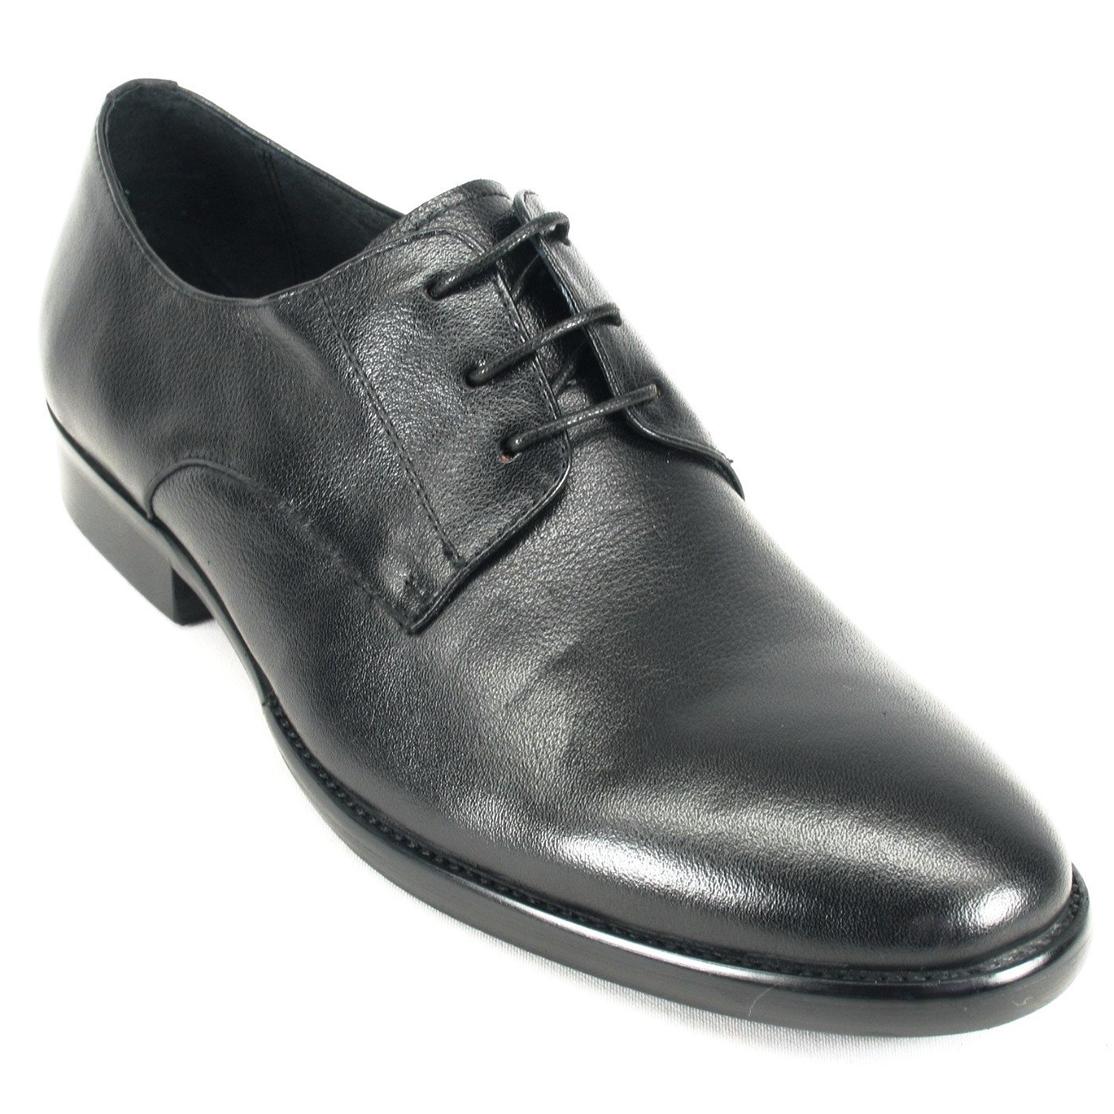 Carrucci Black Genuine Calf Skin Leather Oxford Shoes KS735-01. - $129. ...